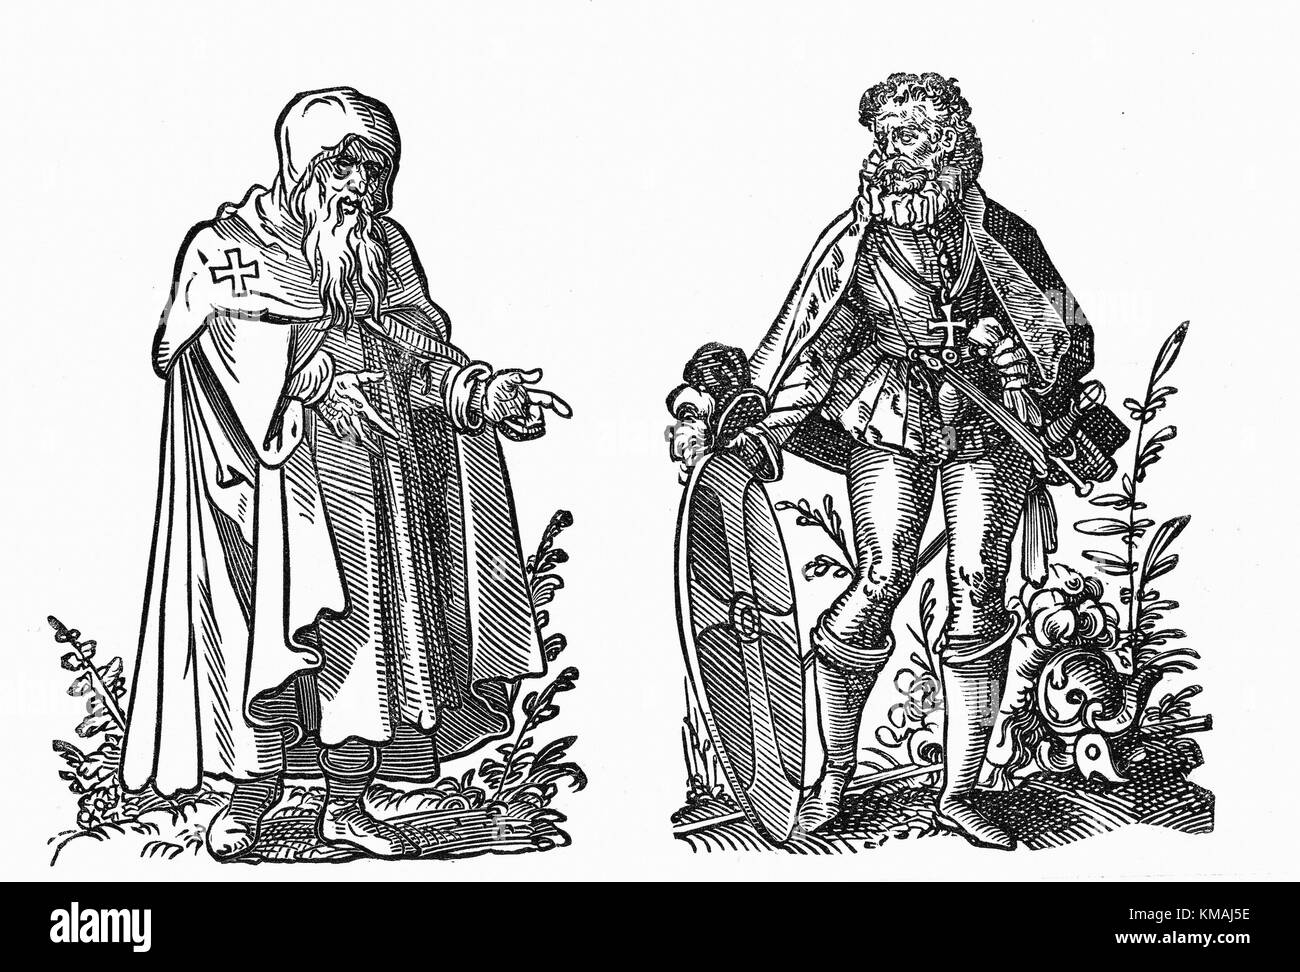 Jost Amman - : Caballero de San Juan de Jerusalén, derecha: Caballero de Rodas. Xilografía del siglo XVI. Foto de stock